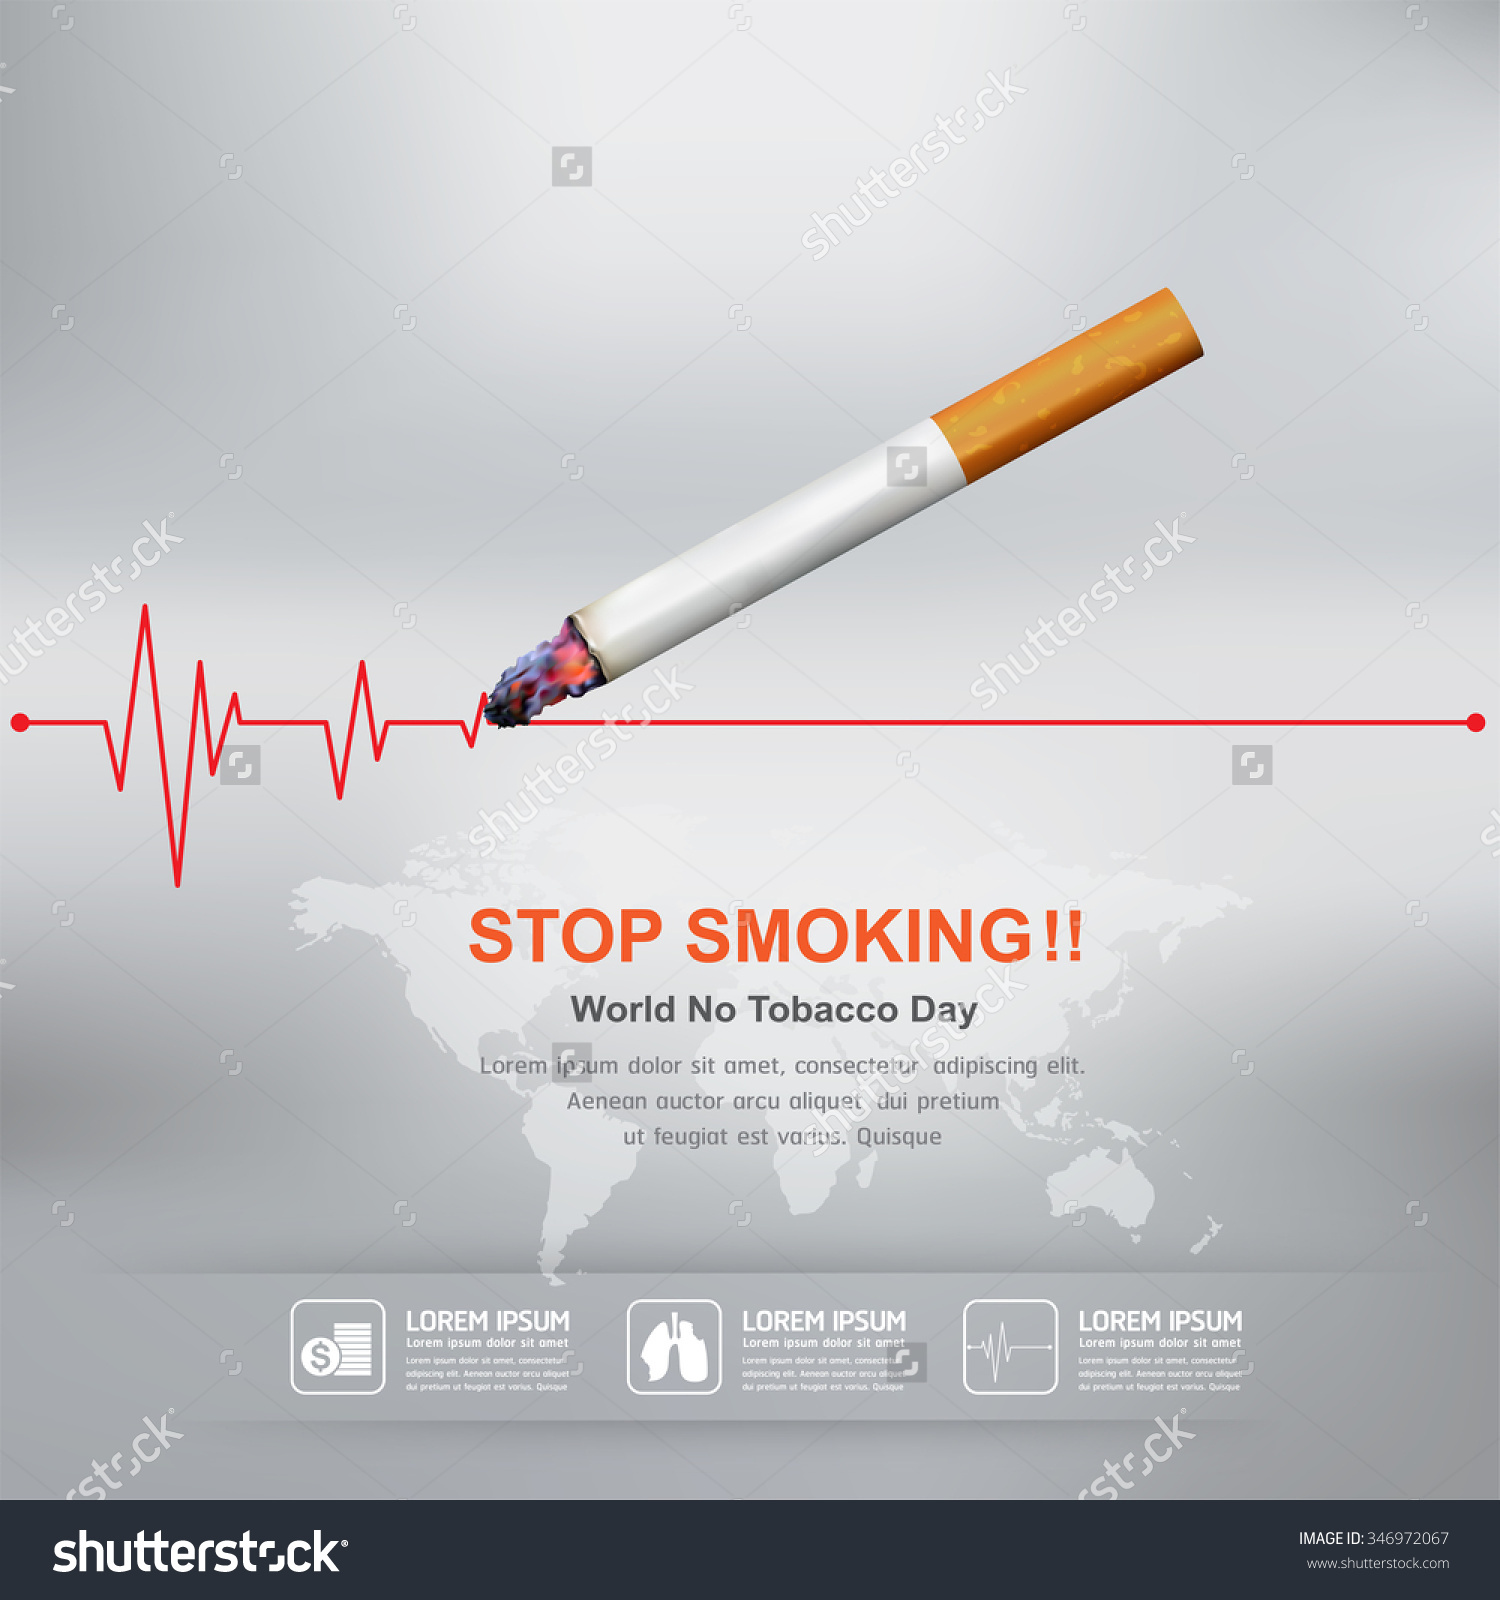 Stop Smoking World No Tobacco Day Cigarette Illustration